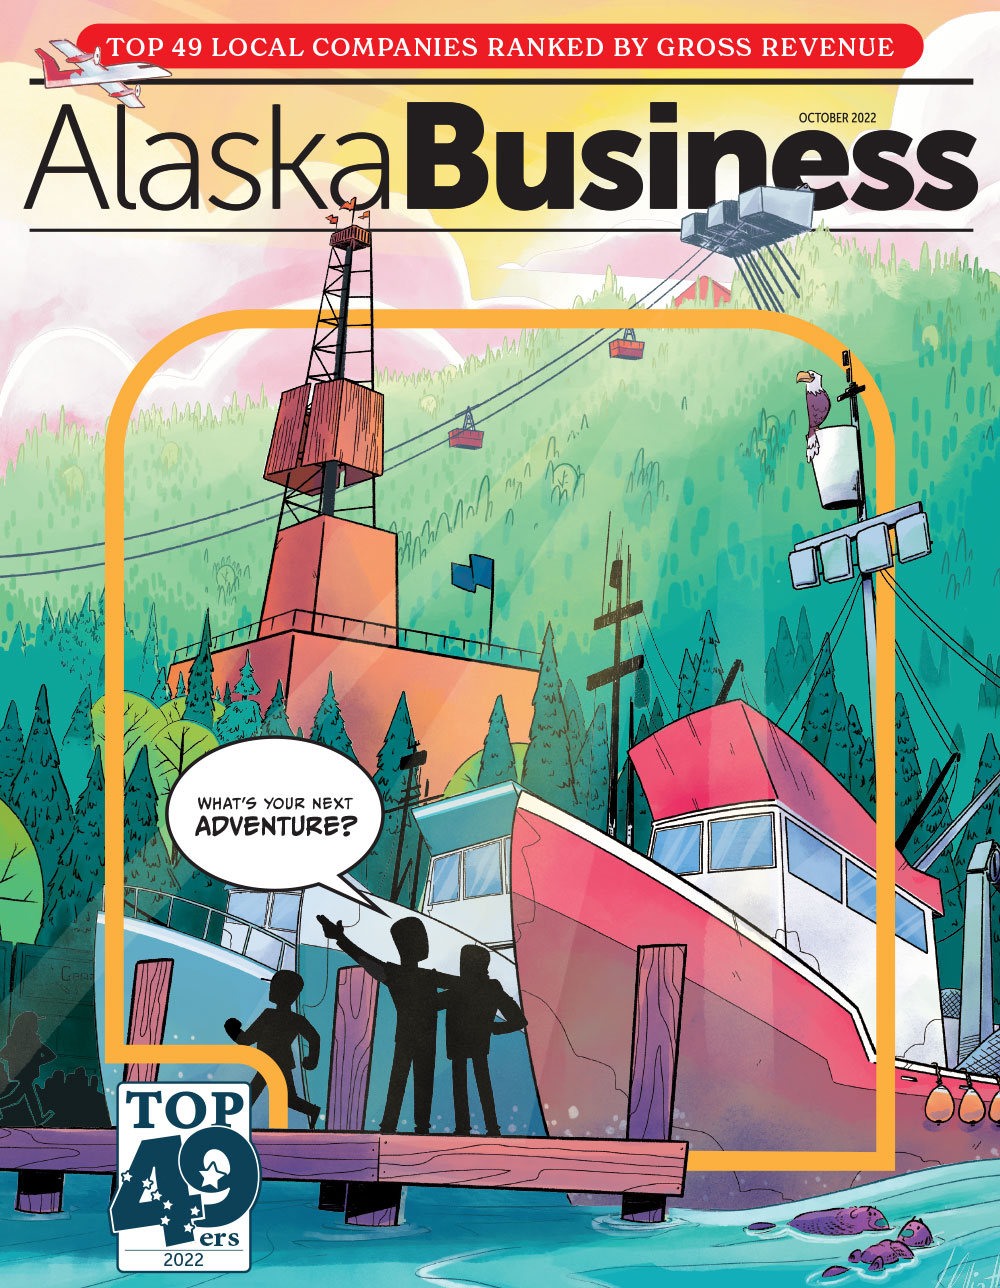 Alaska Business Magazine October 2022 cover